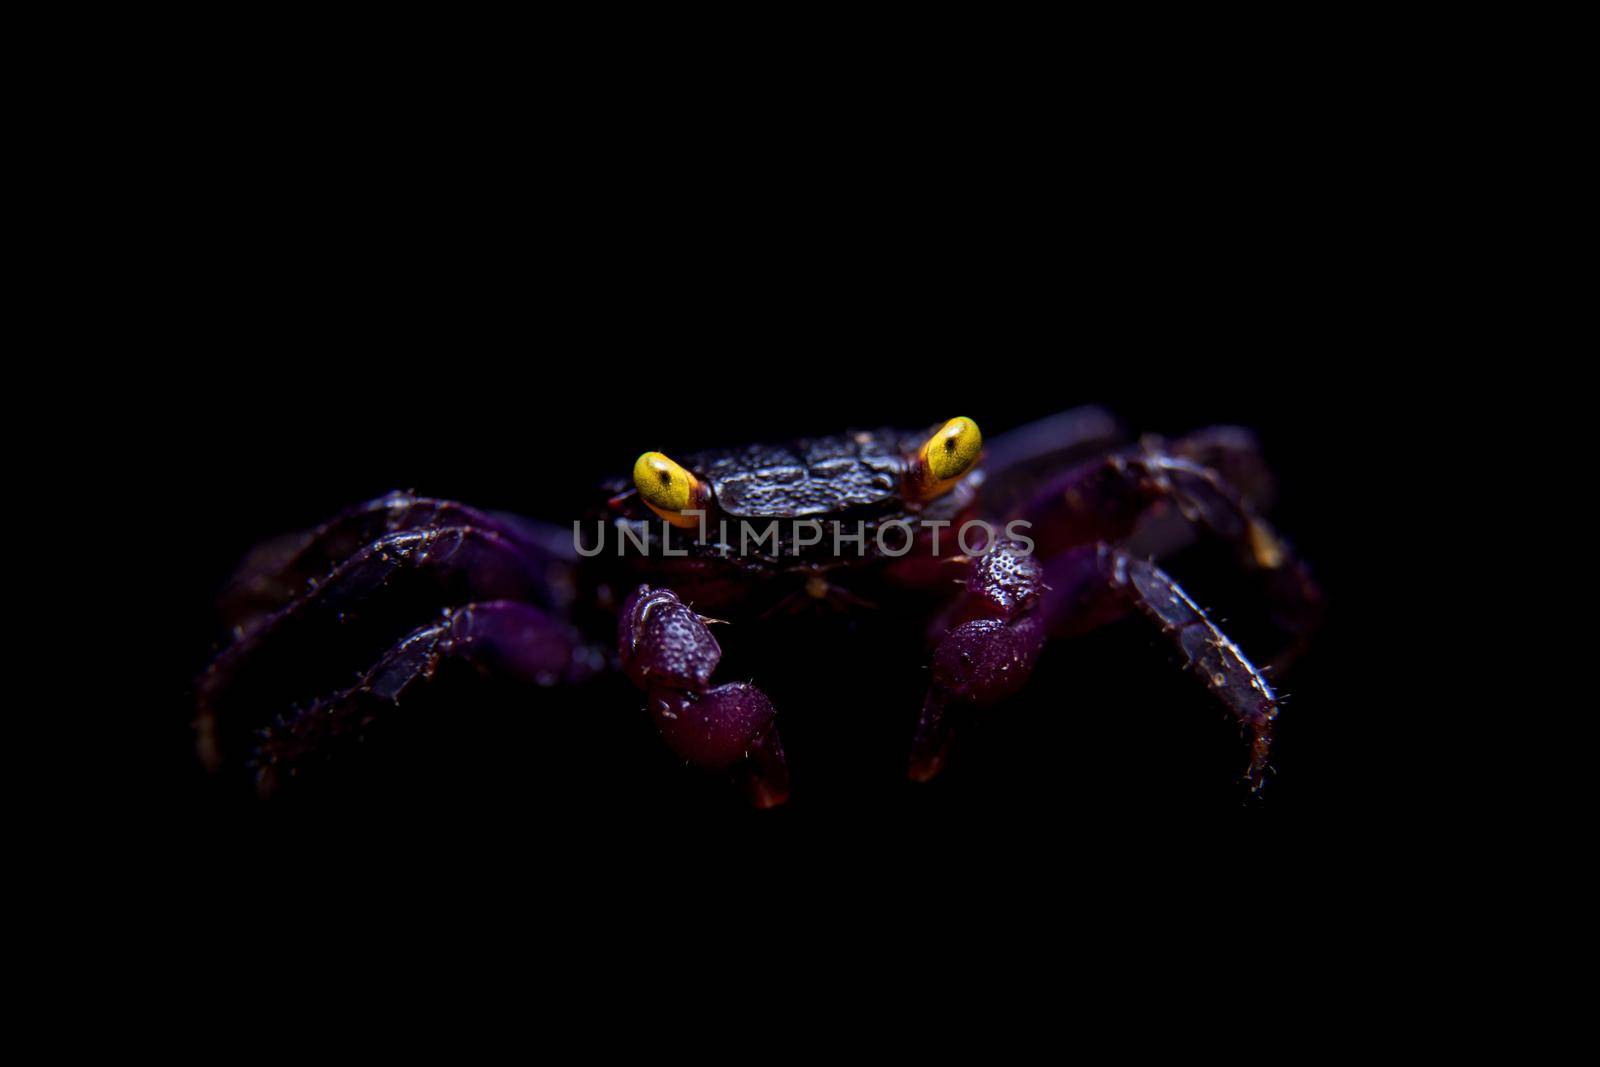 Little Purple Vampire Crab, Geosesarma dennerle, isolated on black background